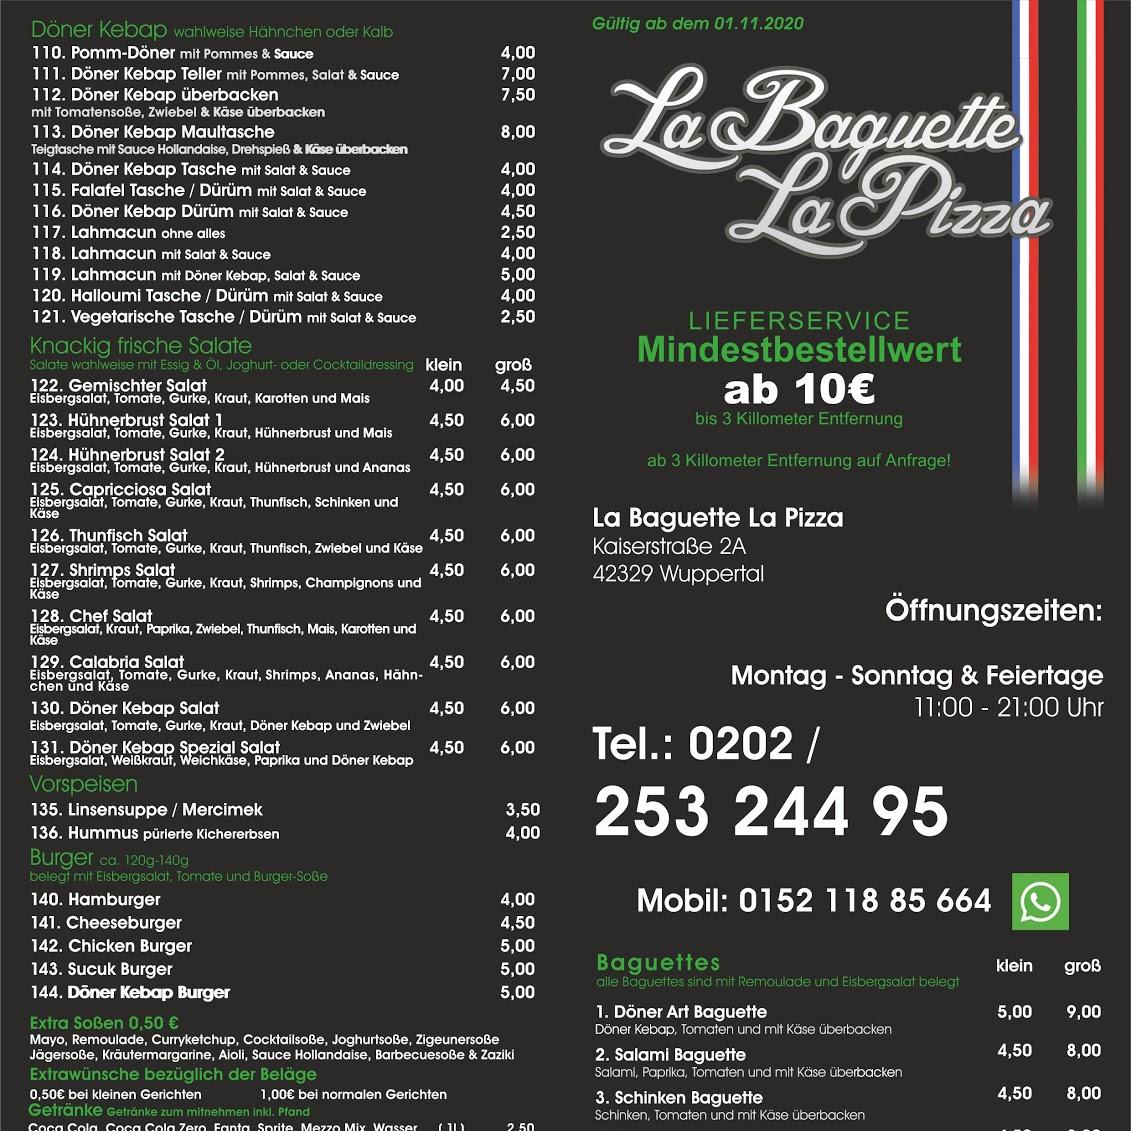 Restaurant "La Baguette La Pizza" in Wuppertal